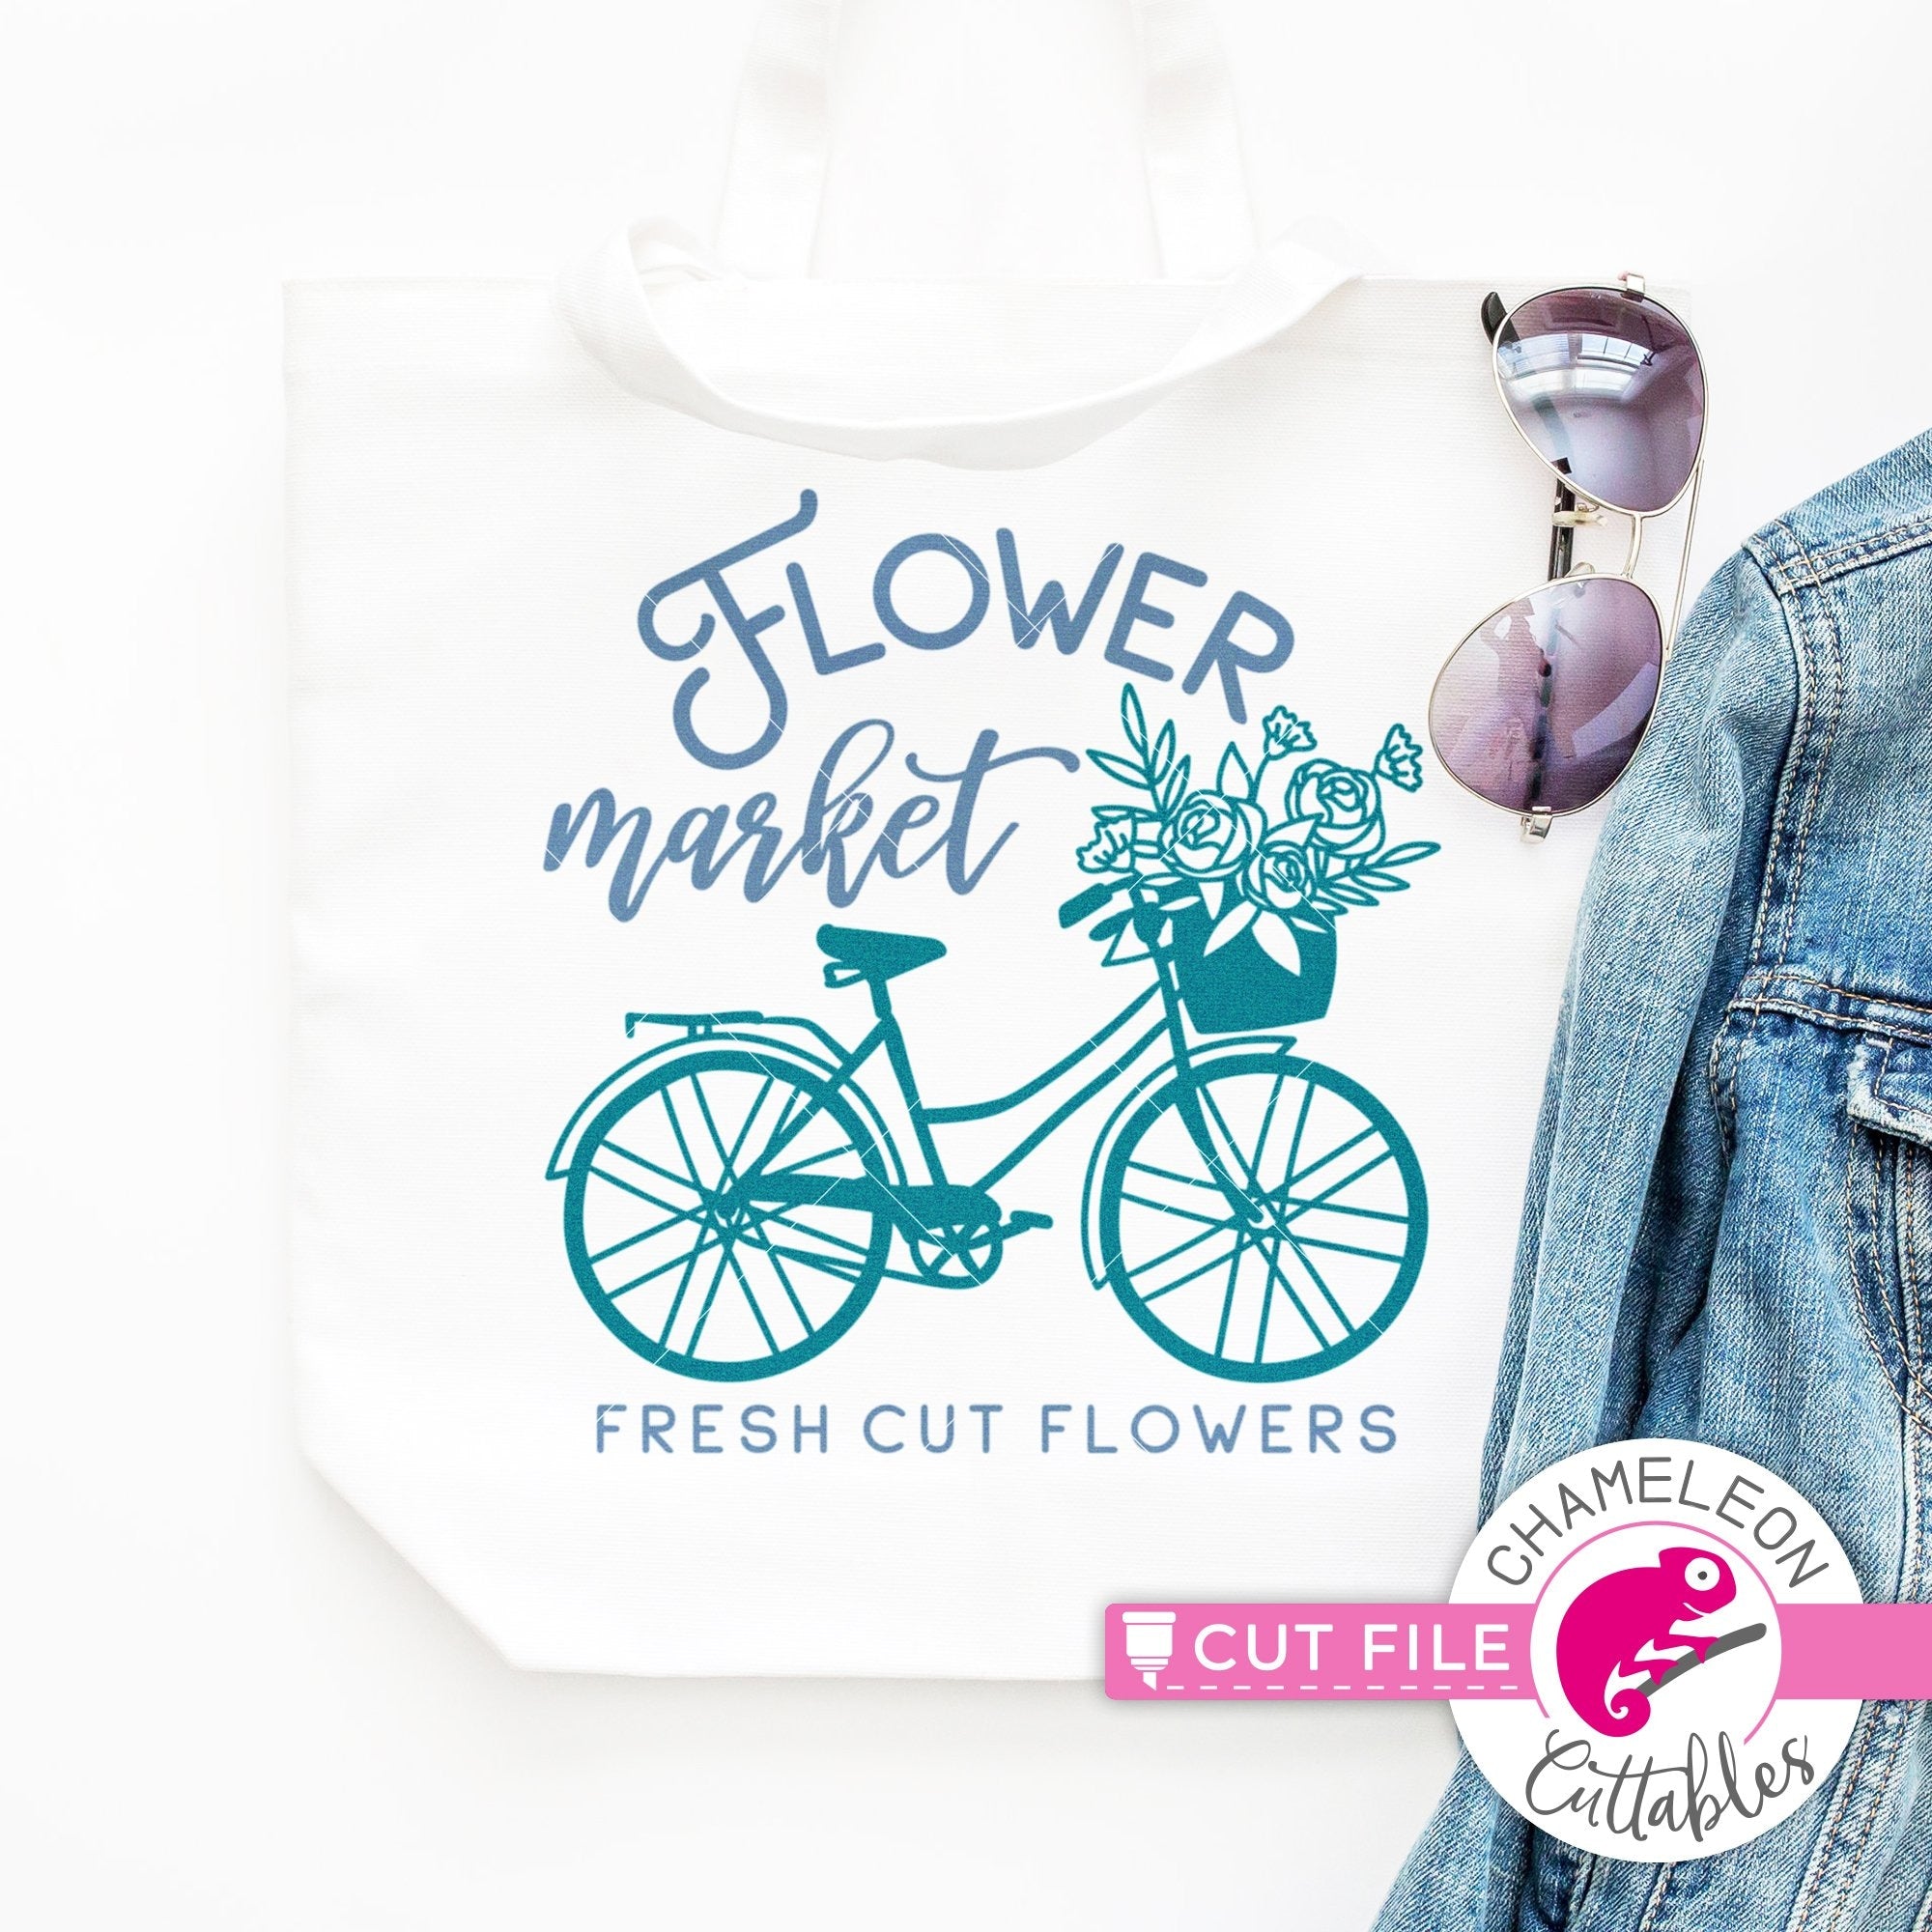 Download Flower Market Bicycle With Flowers Svg Png Dxf Eps Jpeg Chameleon Cuttables Llc Chameleon Cuttables Llc